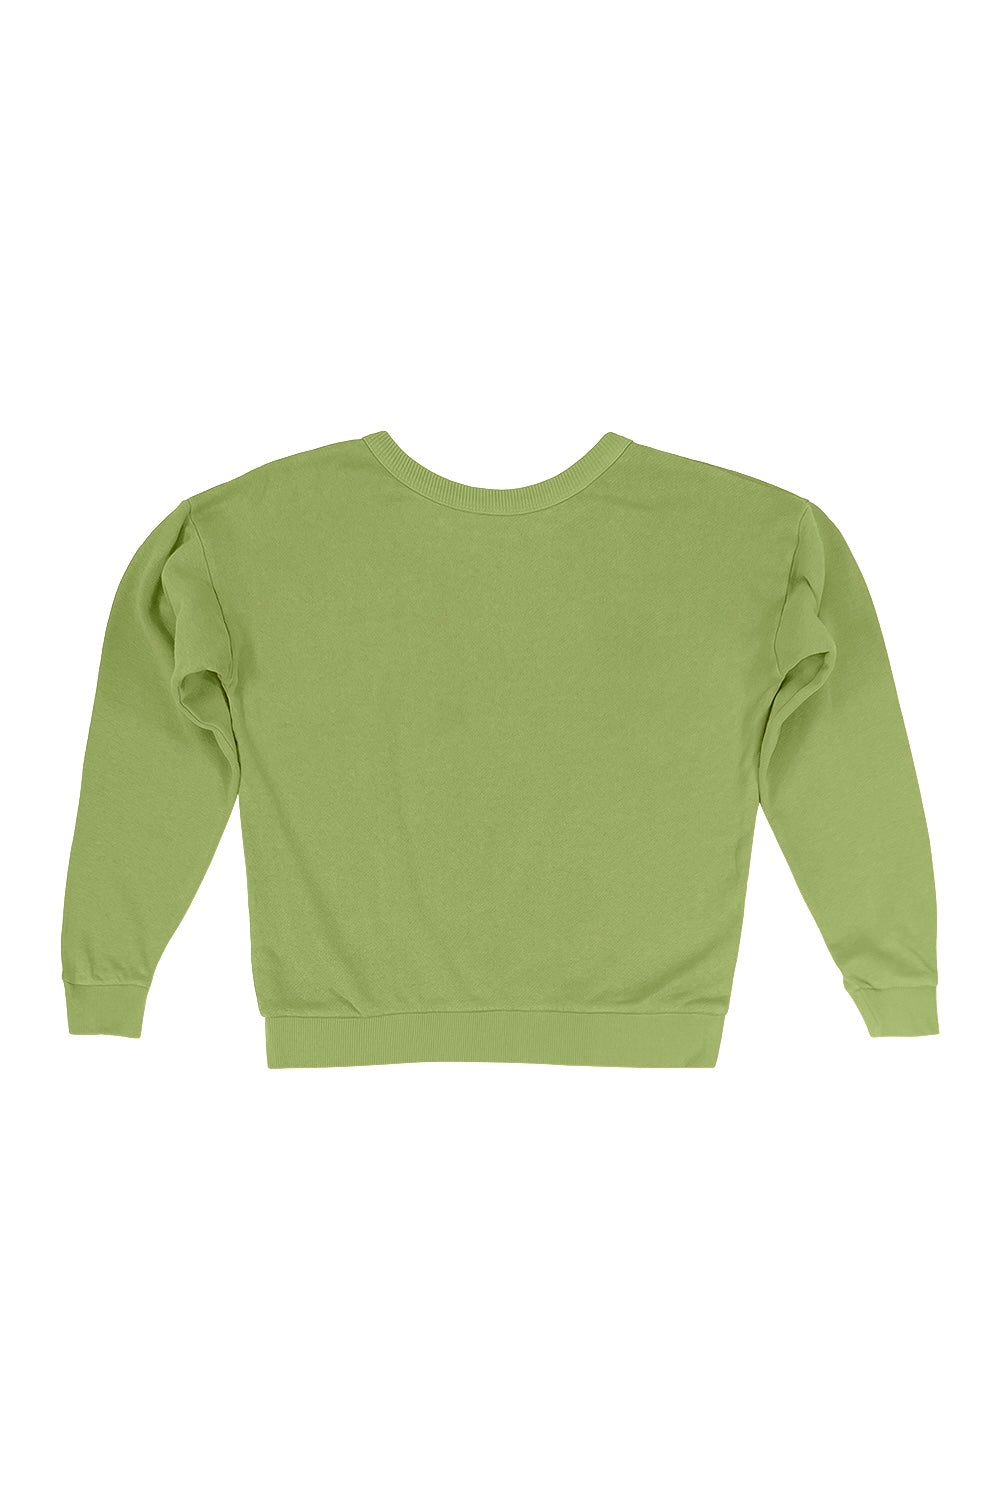 Crux Cropped Sweatshirt | Jungmaven Hemp Clothing & Accessories / Color: Dark Matcha